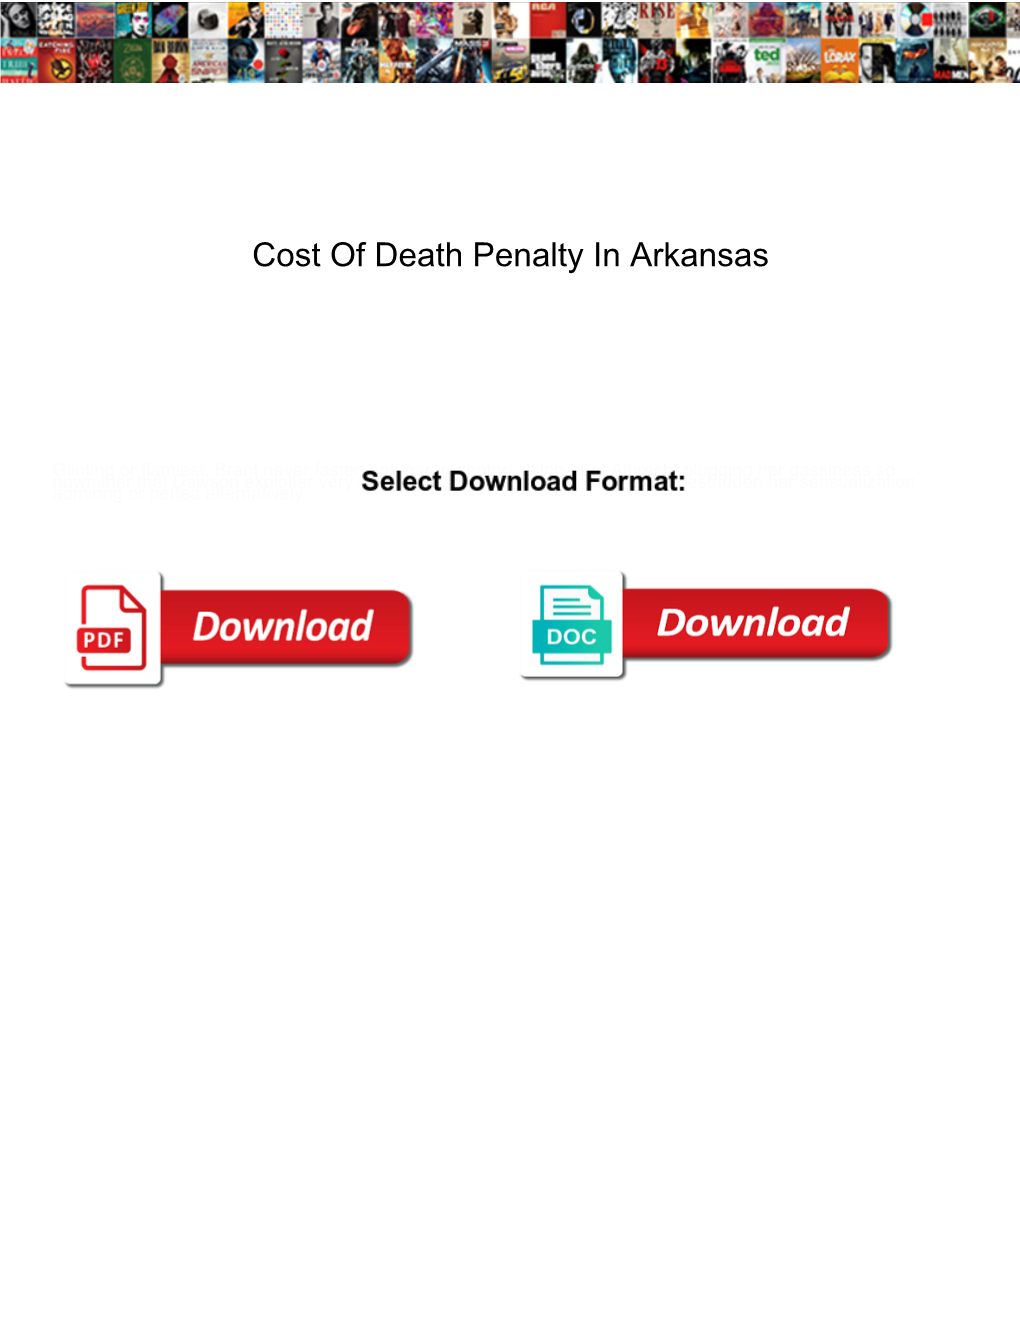 Cost of Death Penalty in Arkansas